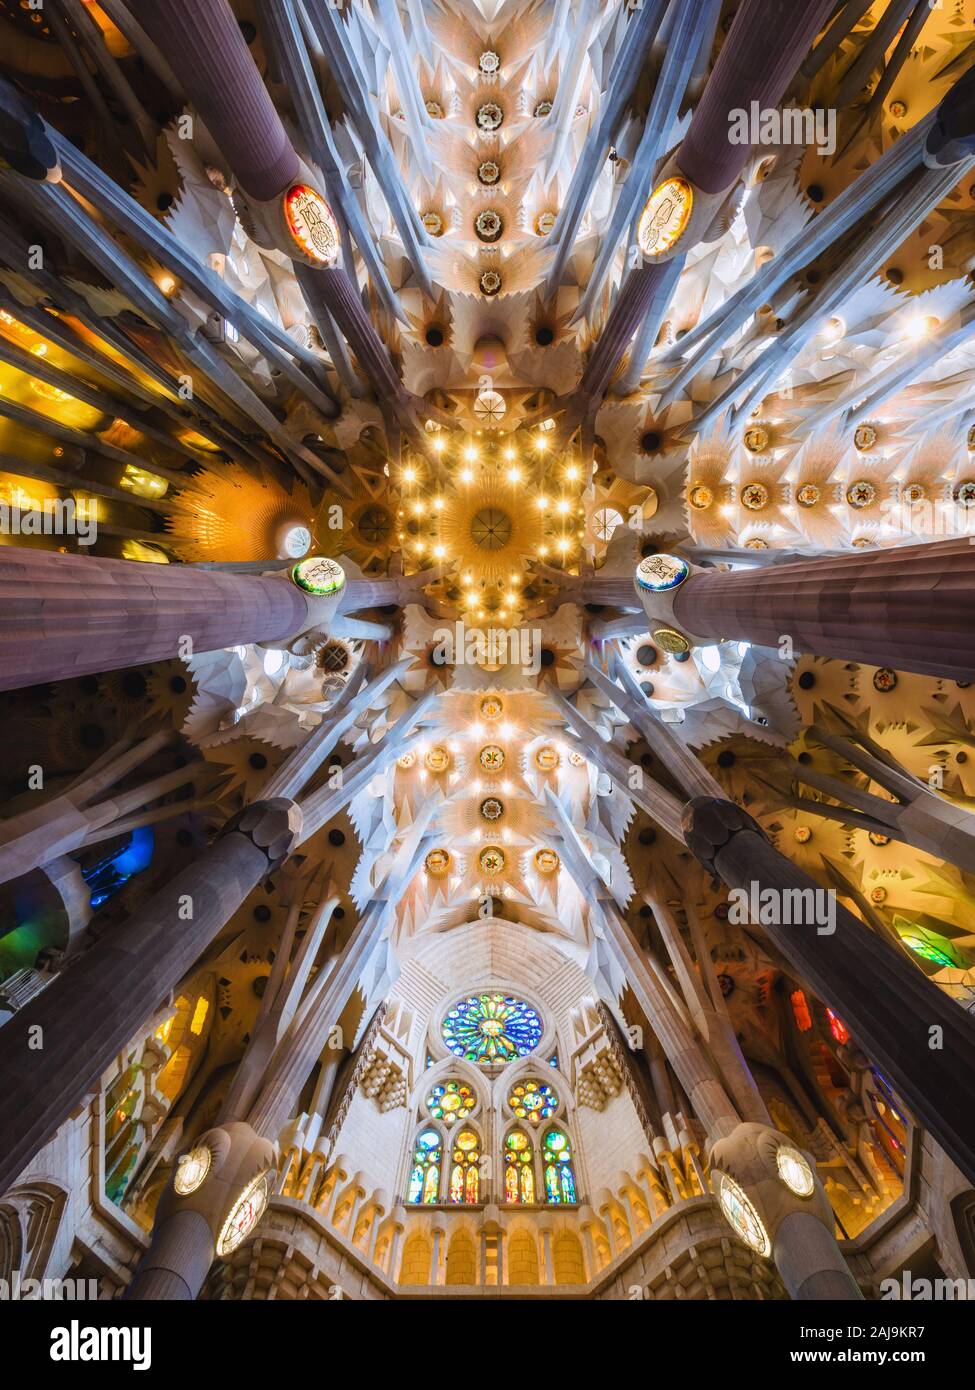 Decke in der Kathedrale Sagrada Familia von Antoni Gaudi, Barcelona  Stockfotografie - Alamy